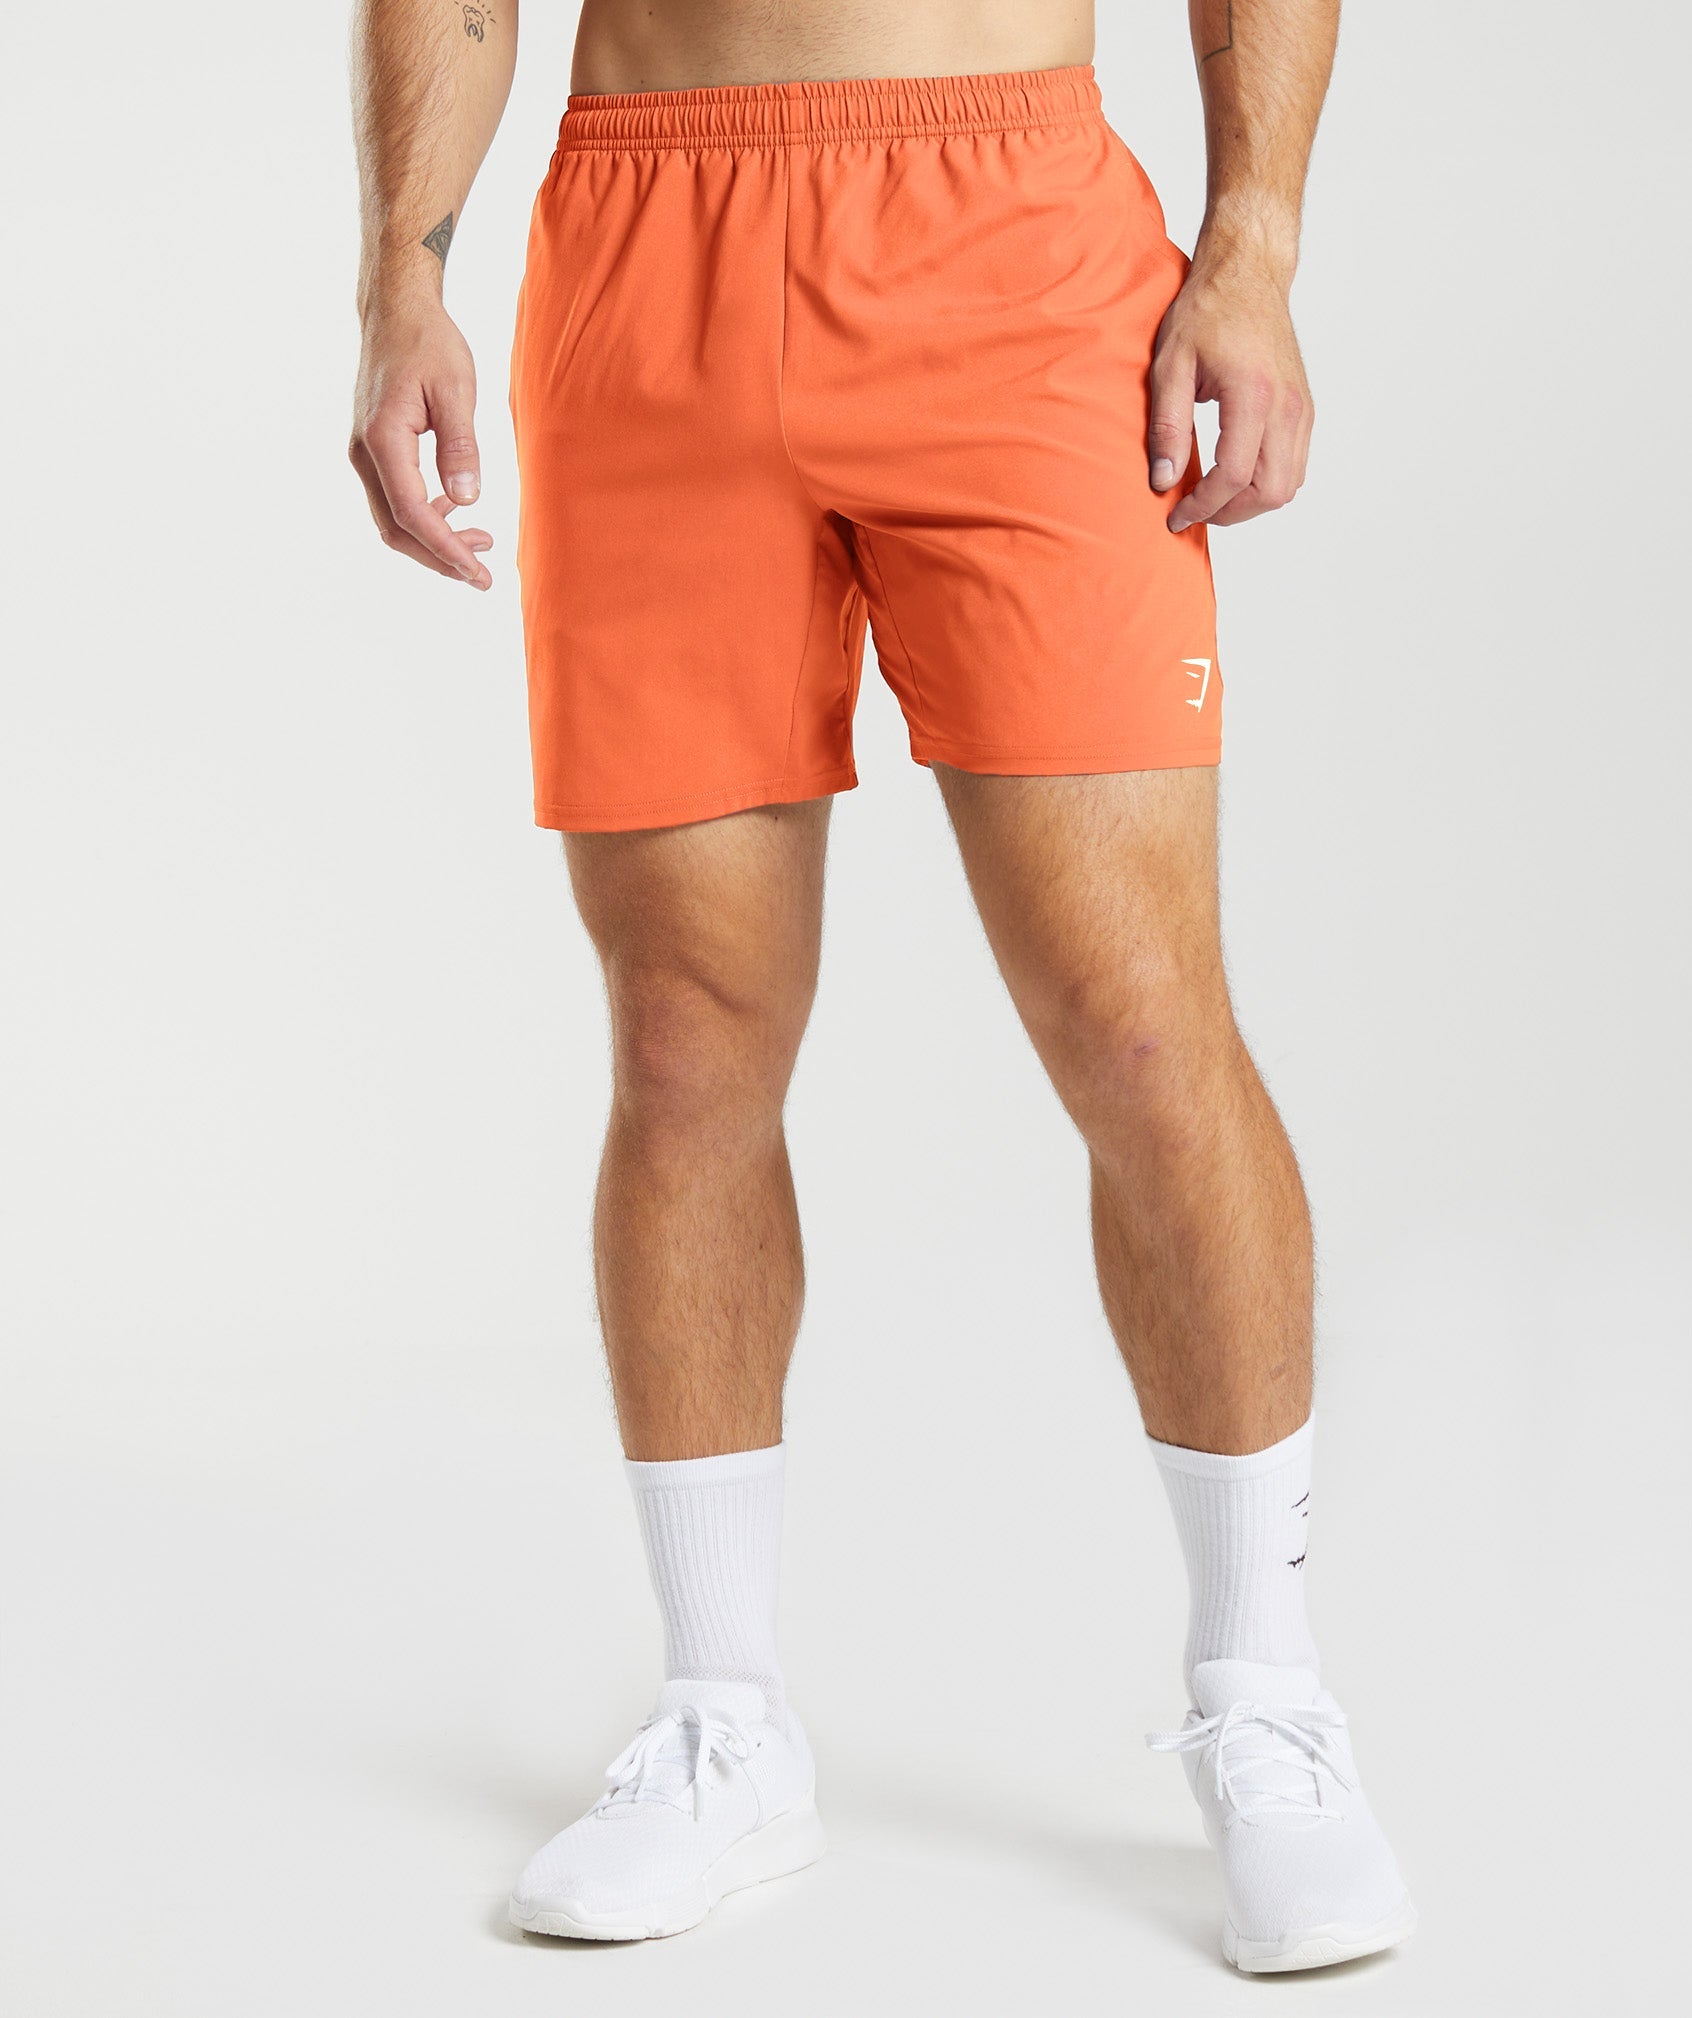 Arrival Shorts in Papaya Orange - view 1